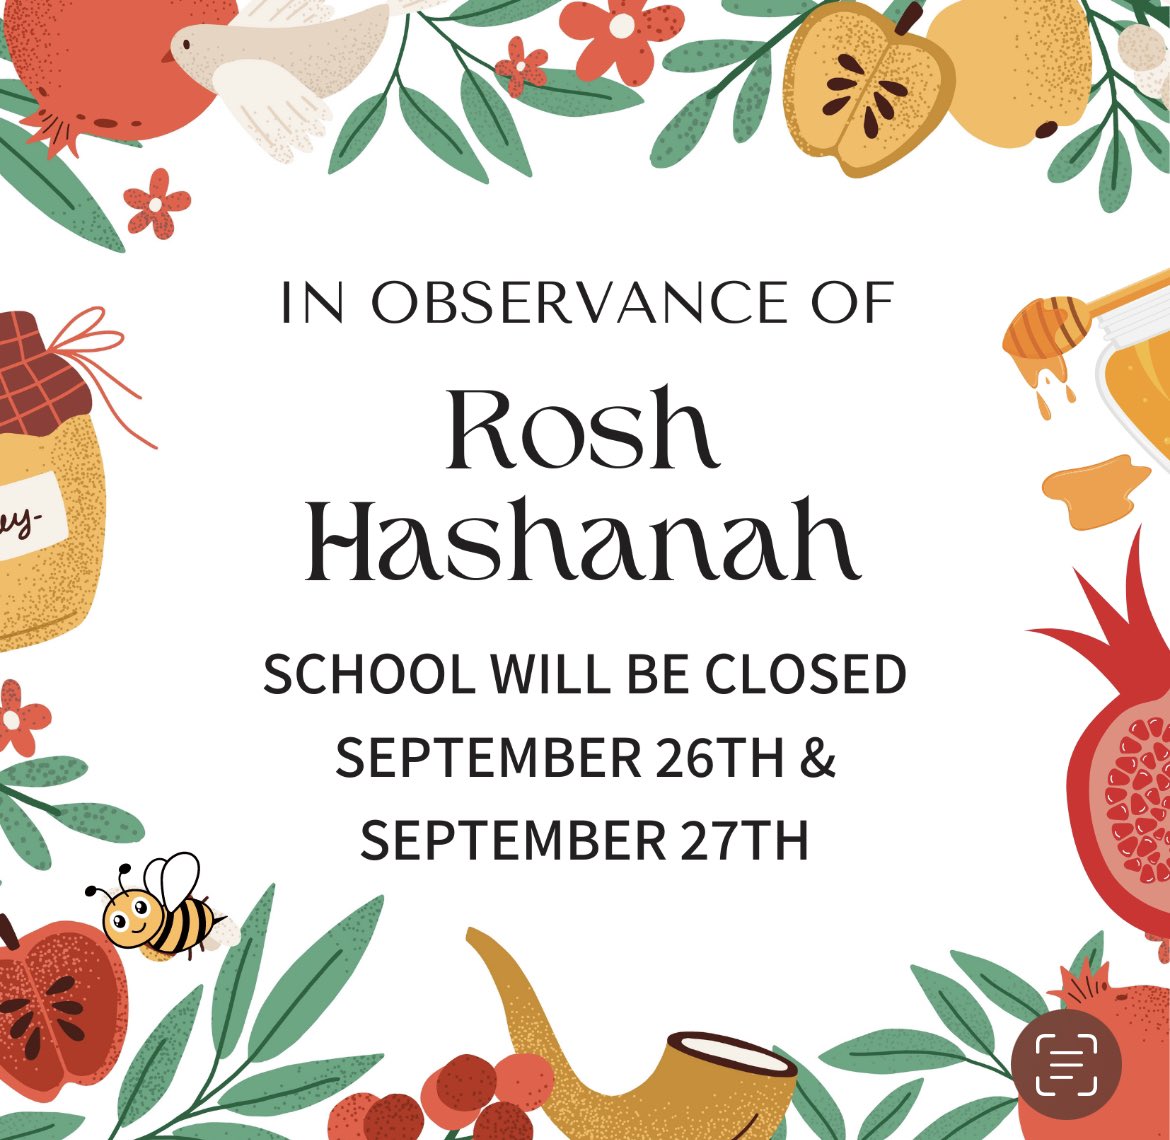 Wishing all that celebrate a Happy Rosh Hashanah 🍯 @DrJoyAbrams @DrMarionWilson @CSD31SI @NYCSchools